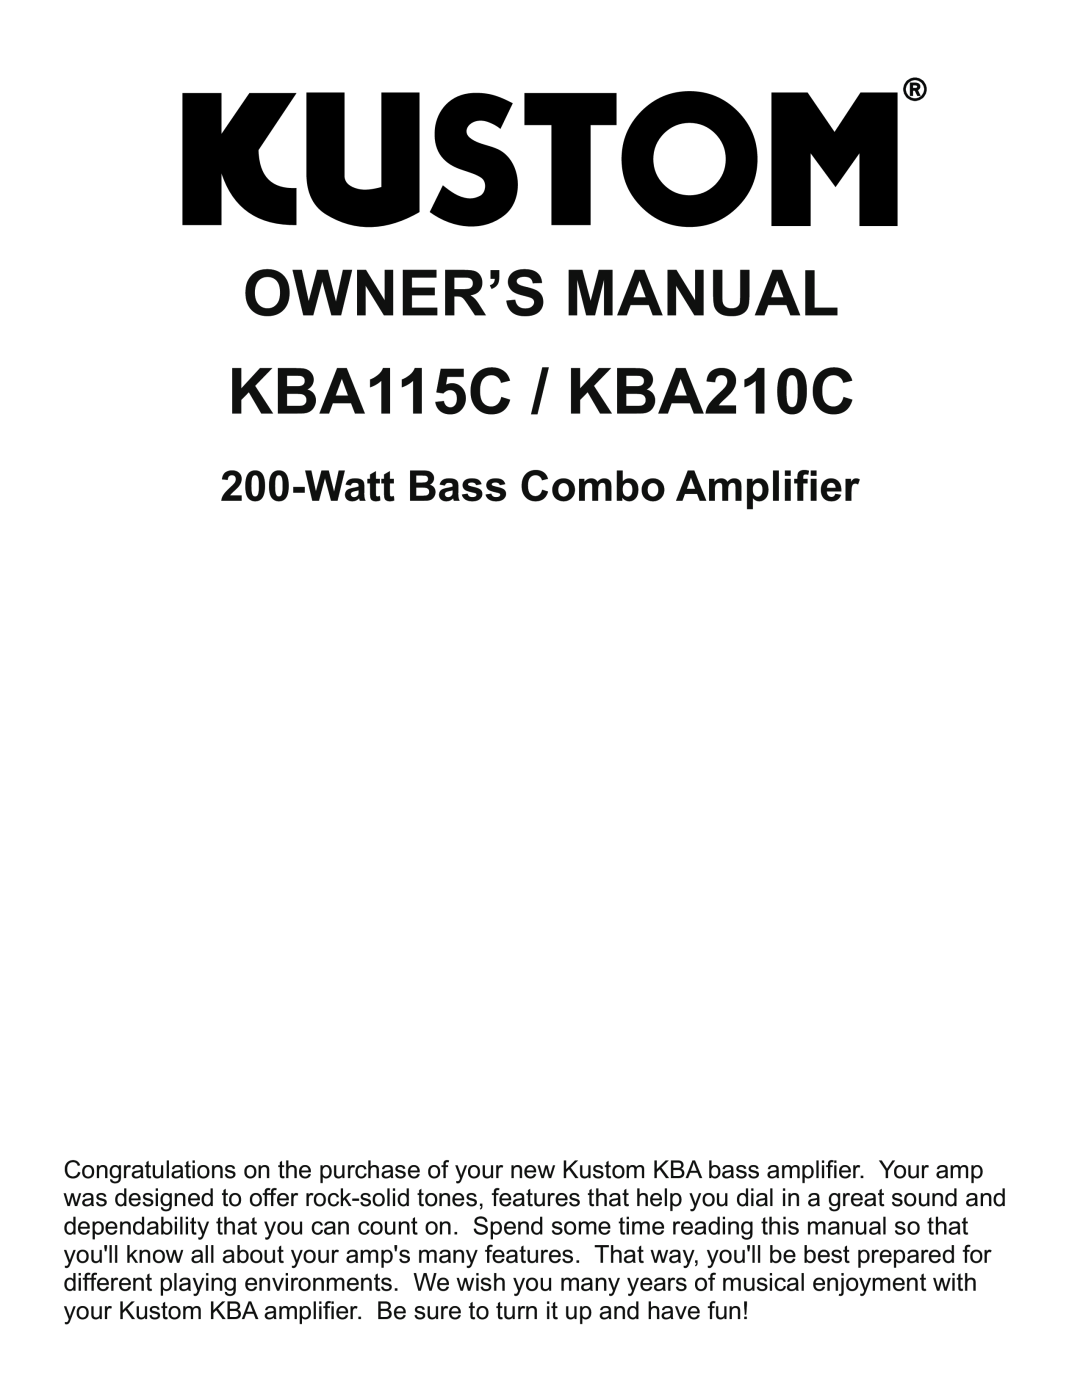 Kustom KBA115C/KBA210C owner manual WattBass Combo Amplifier 